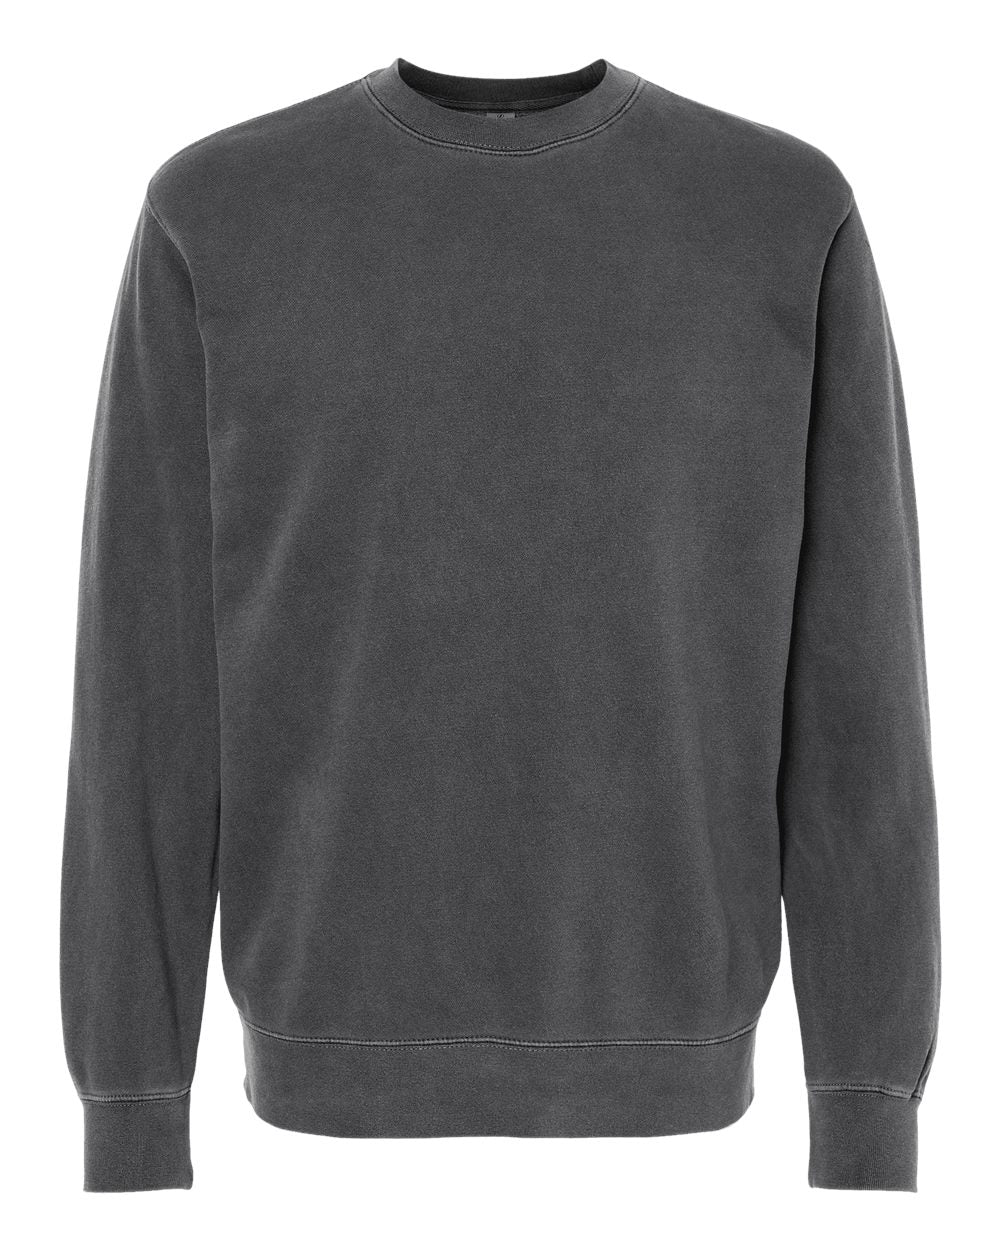 Pigment Black Sweatshirt - T9508BK